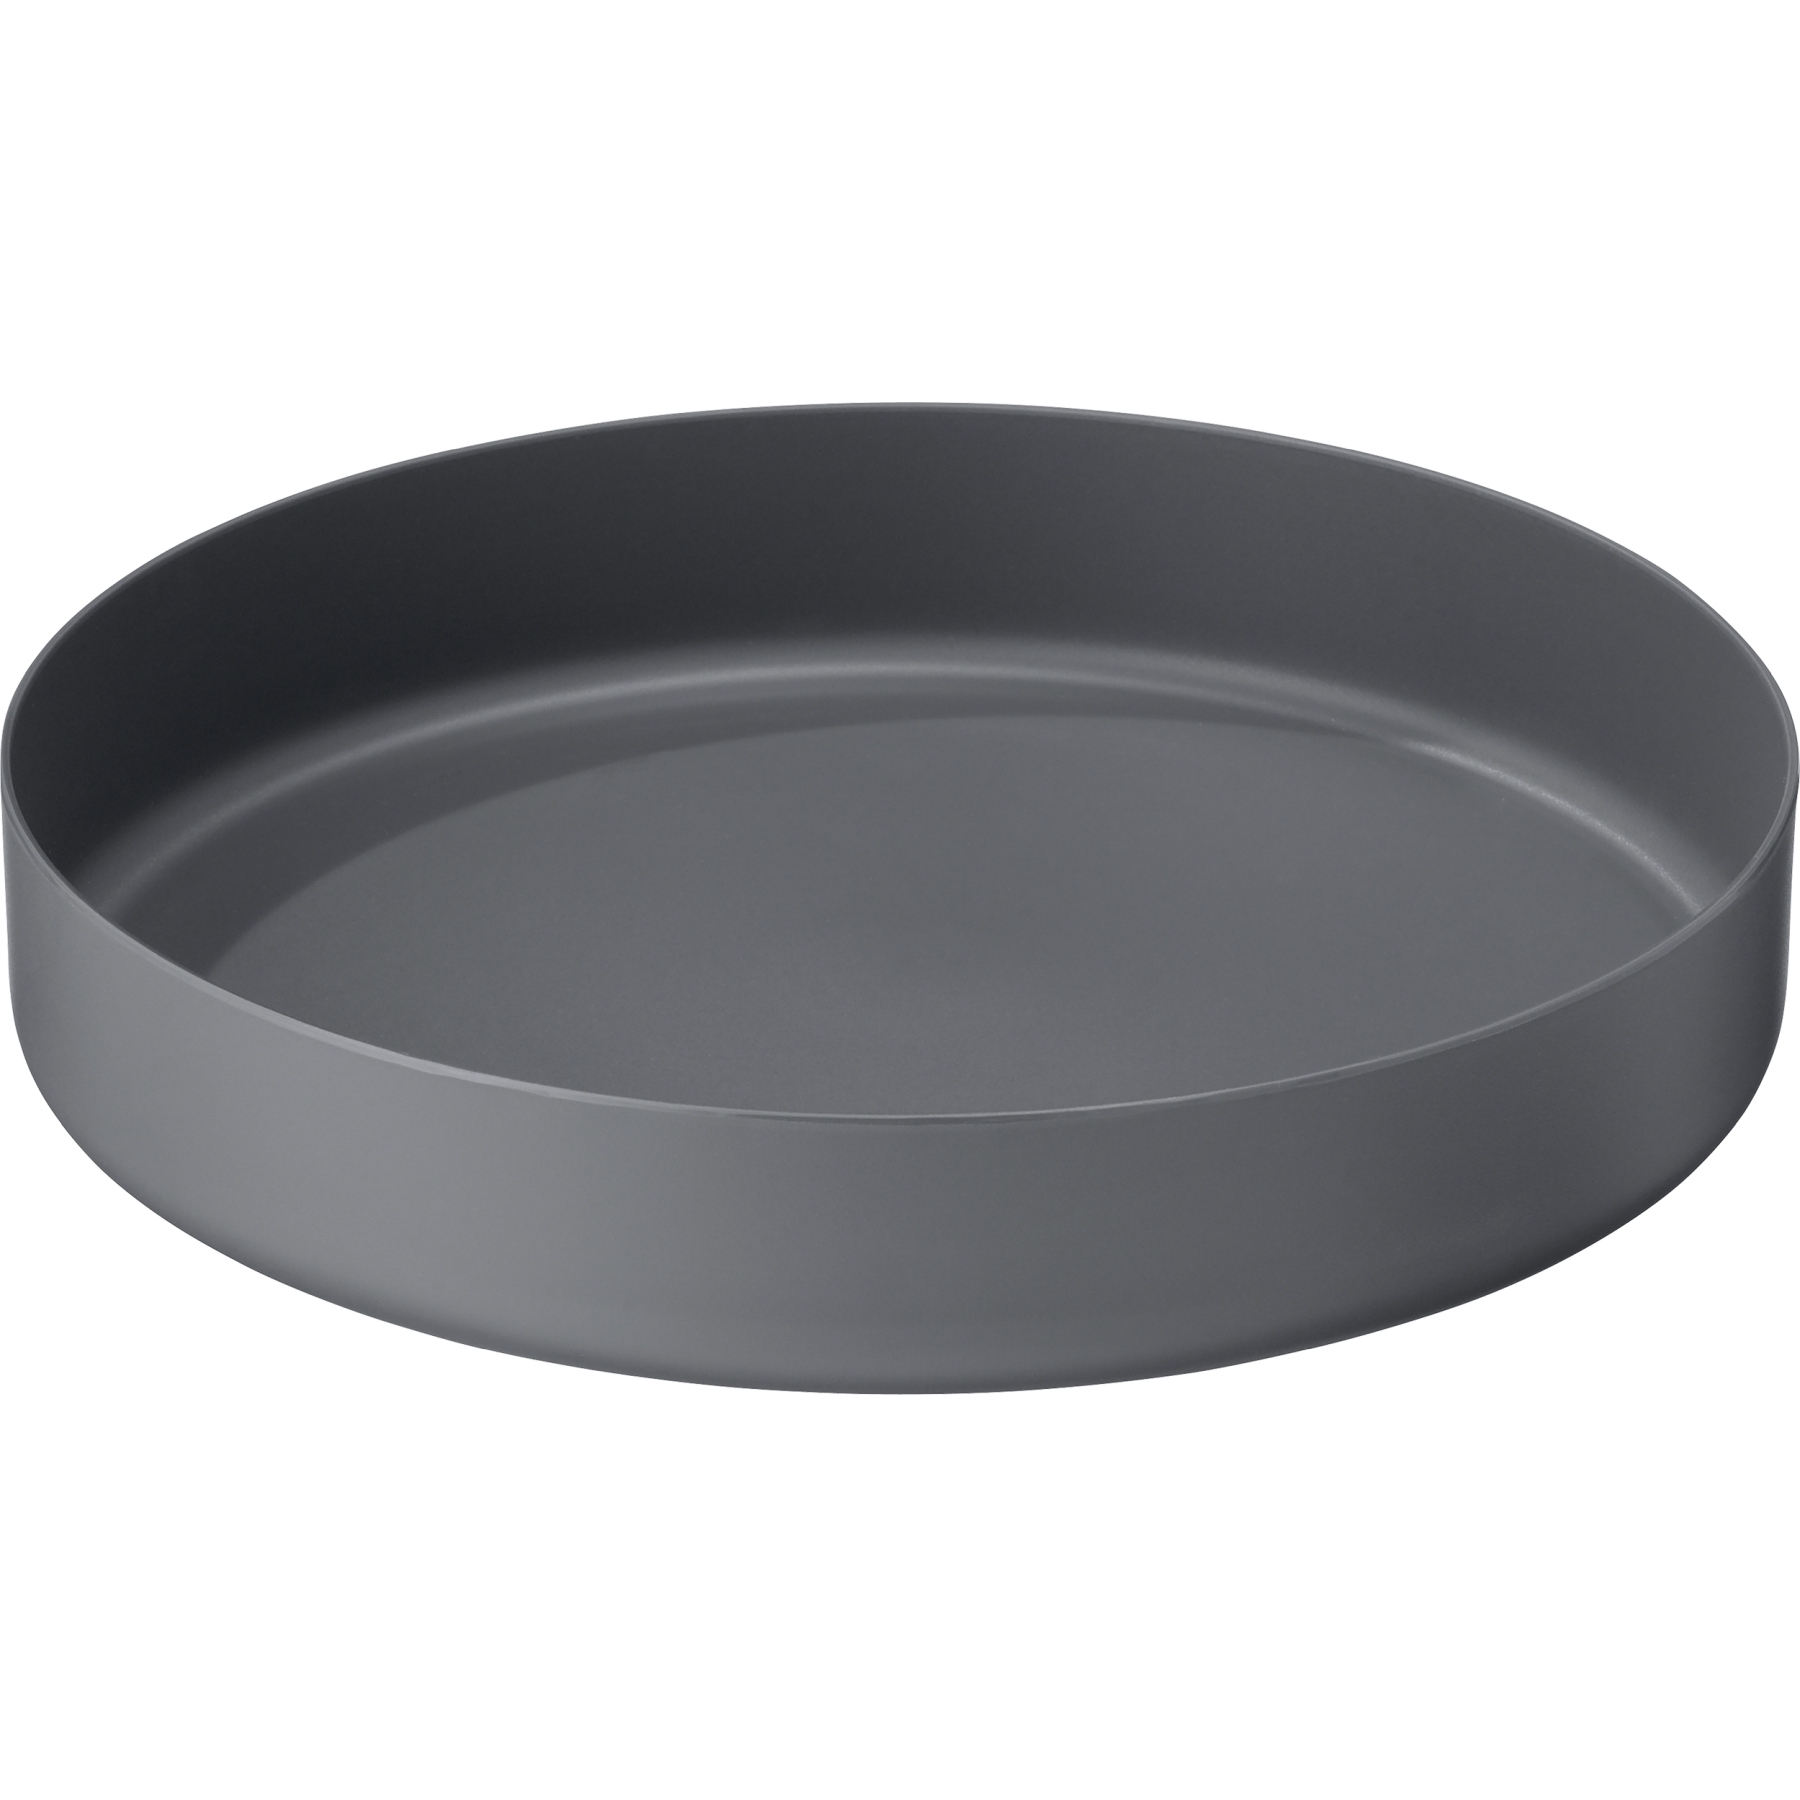 Image of MSR Deep Dishware Plate - Large